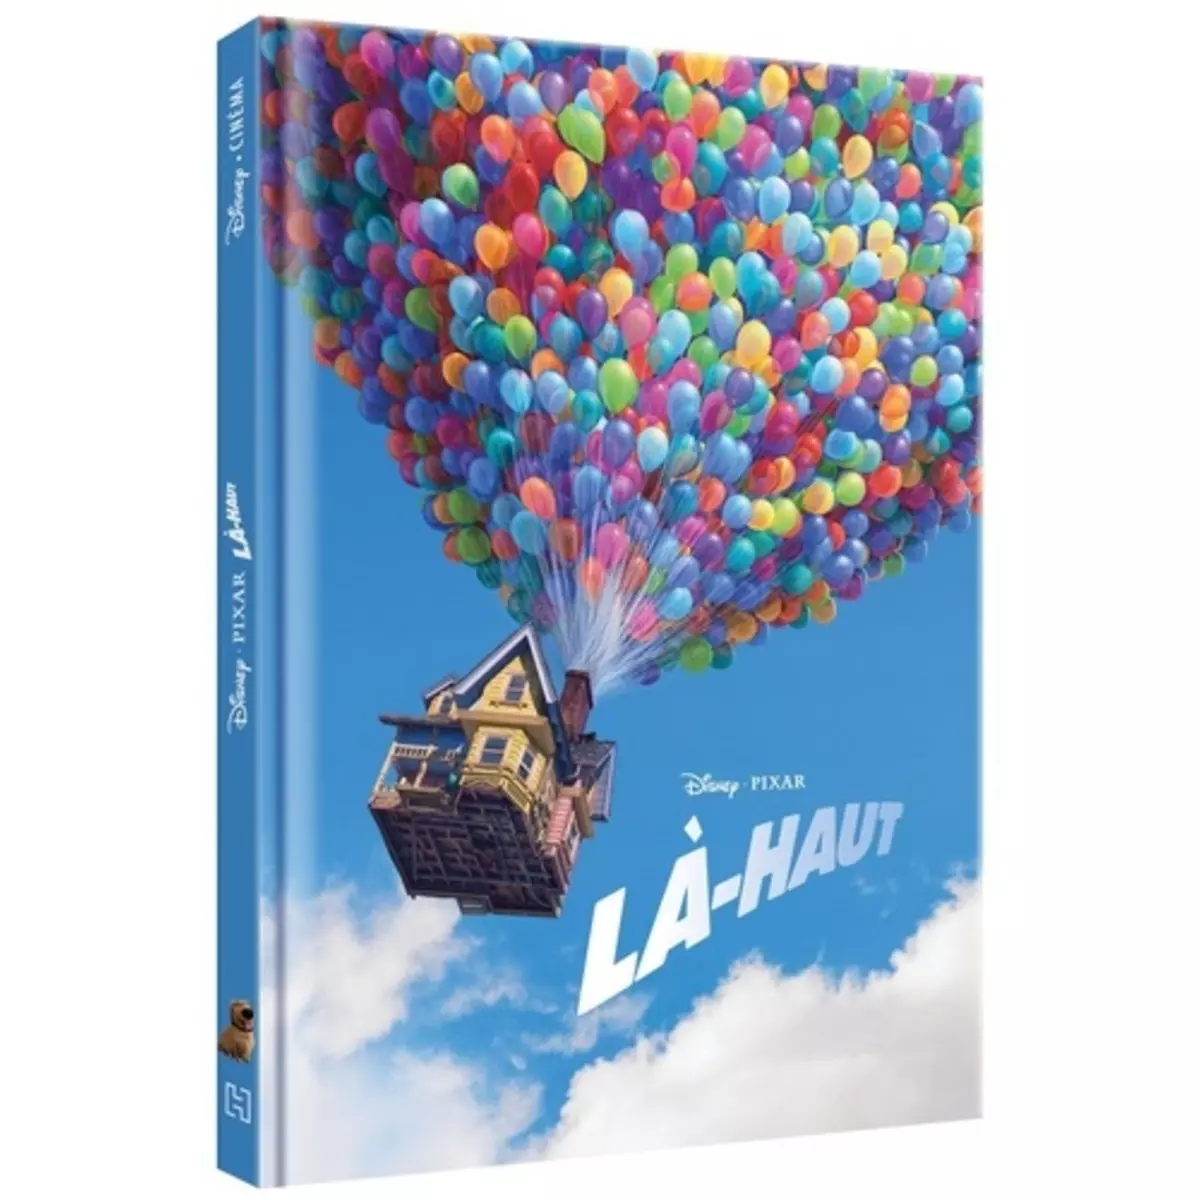  LA-HAUT. L'HISTOIRE DU FILM, Disney Pixar